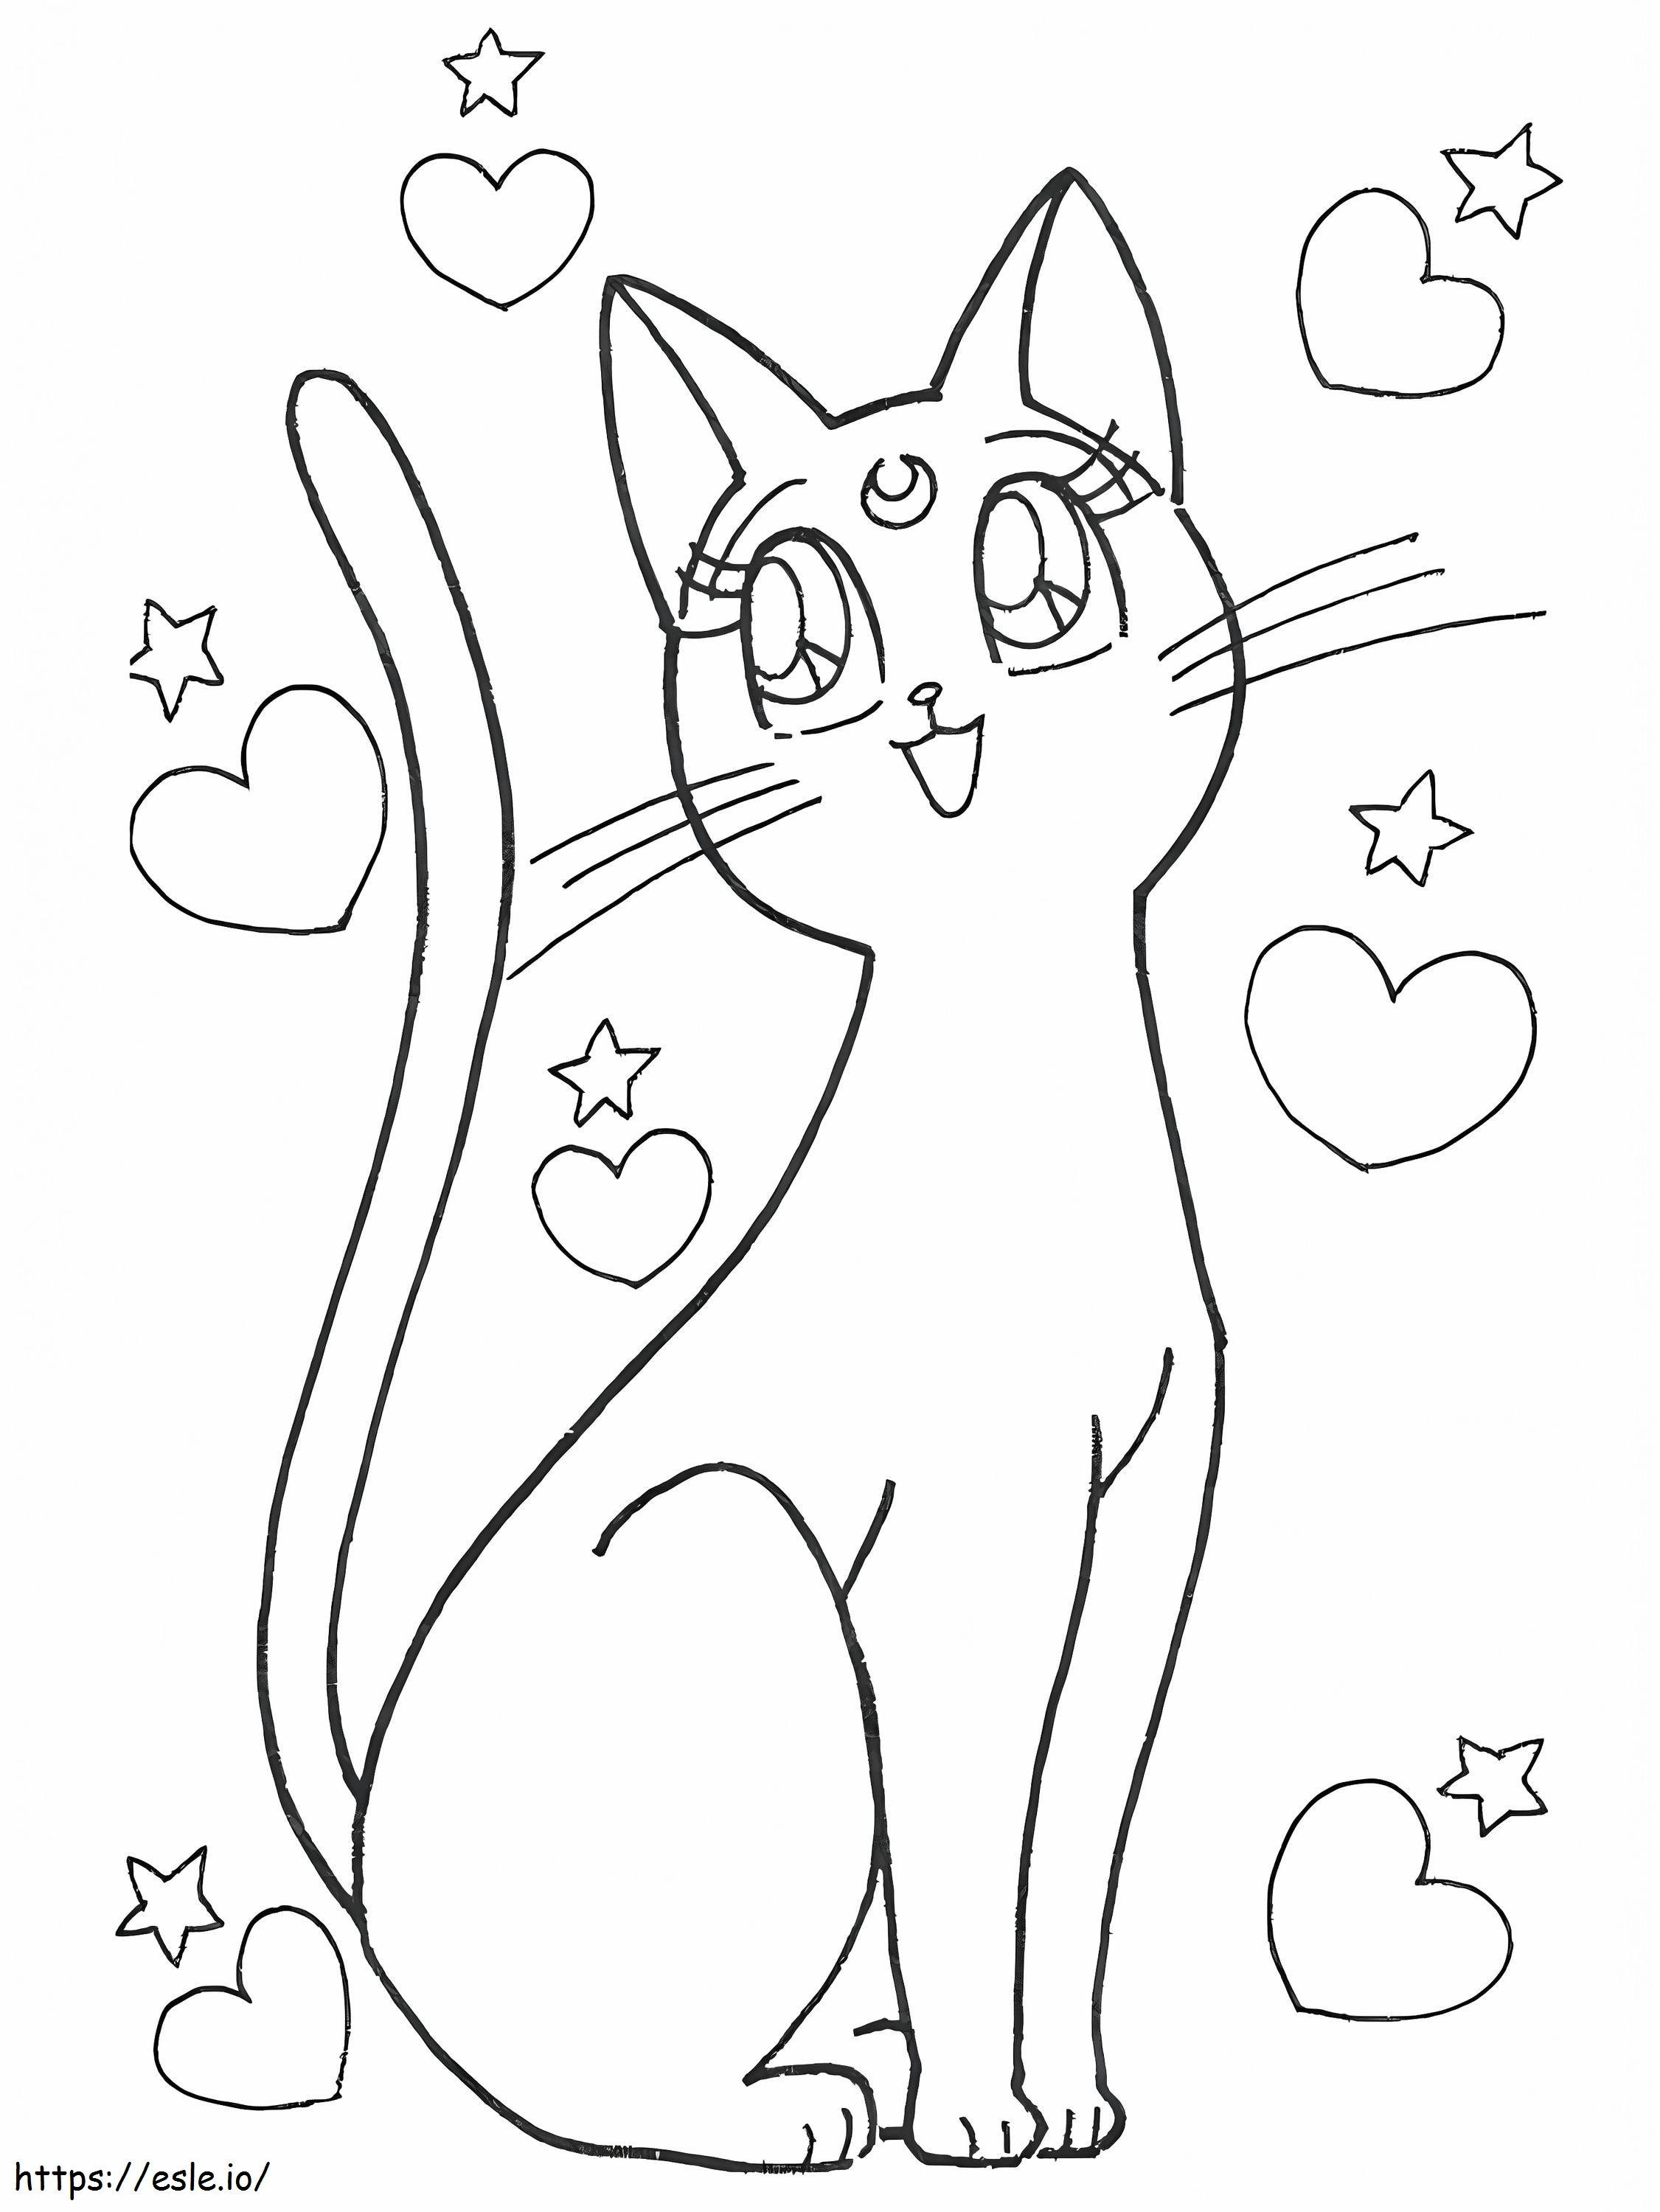 Artemis Sailor Moon coloring page